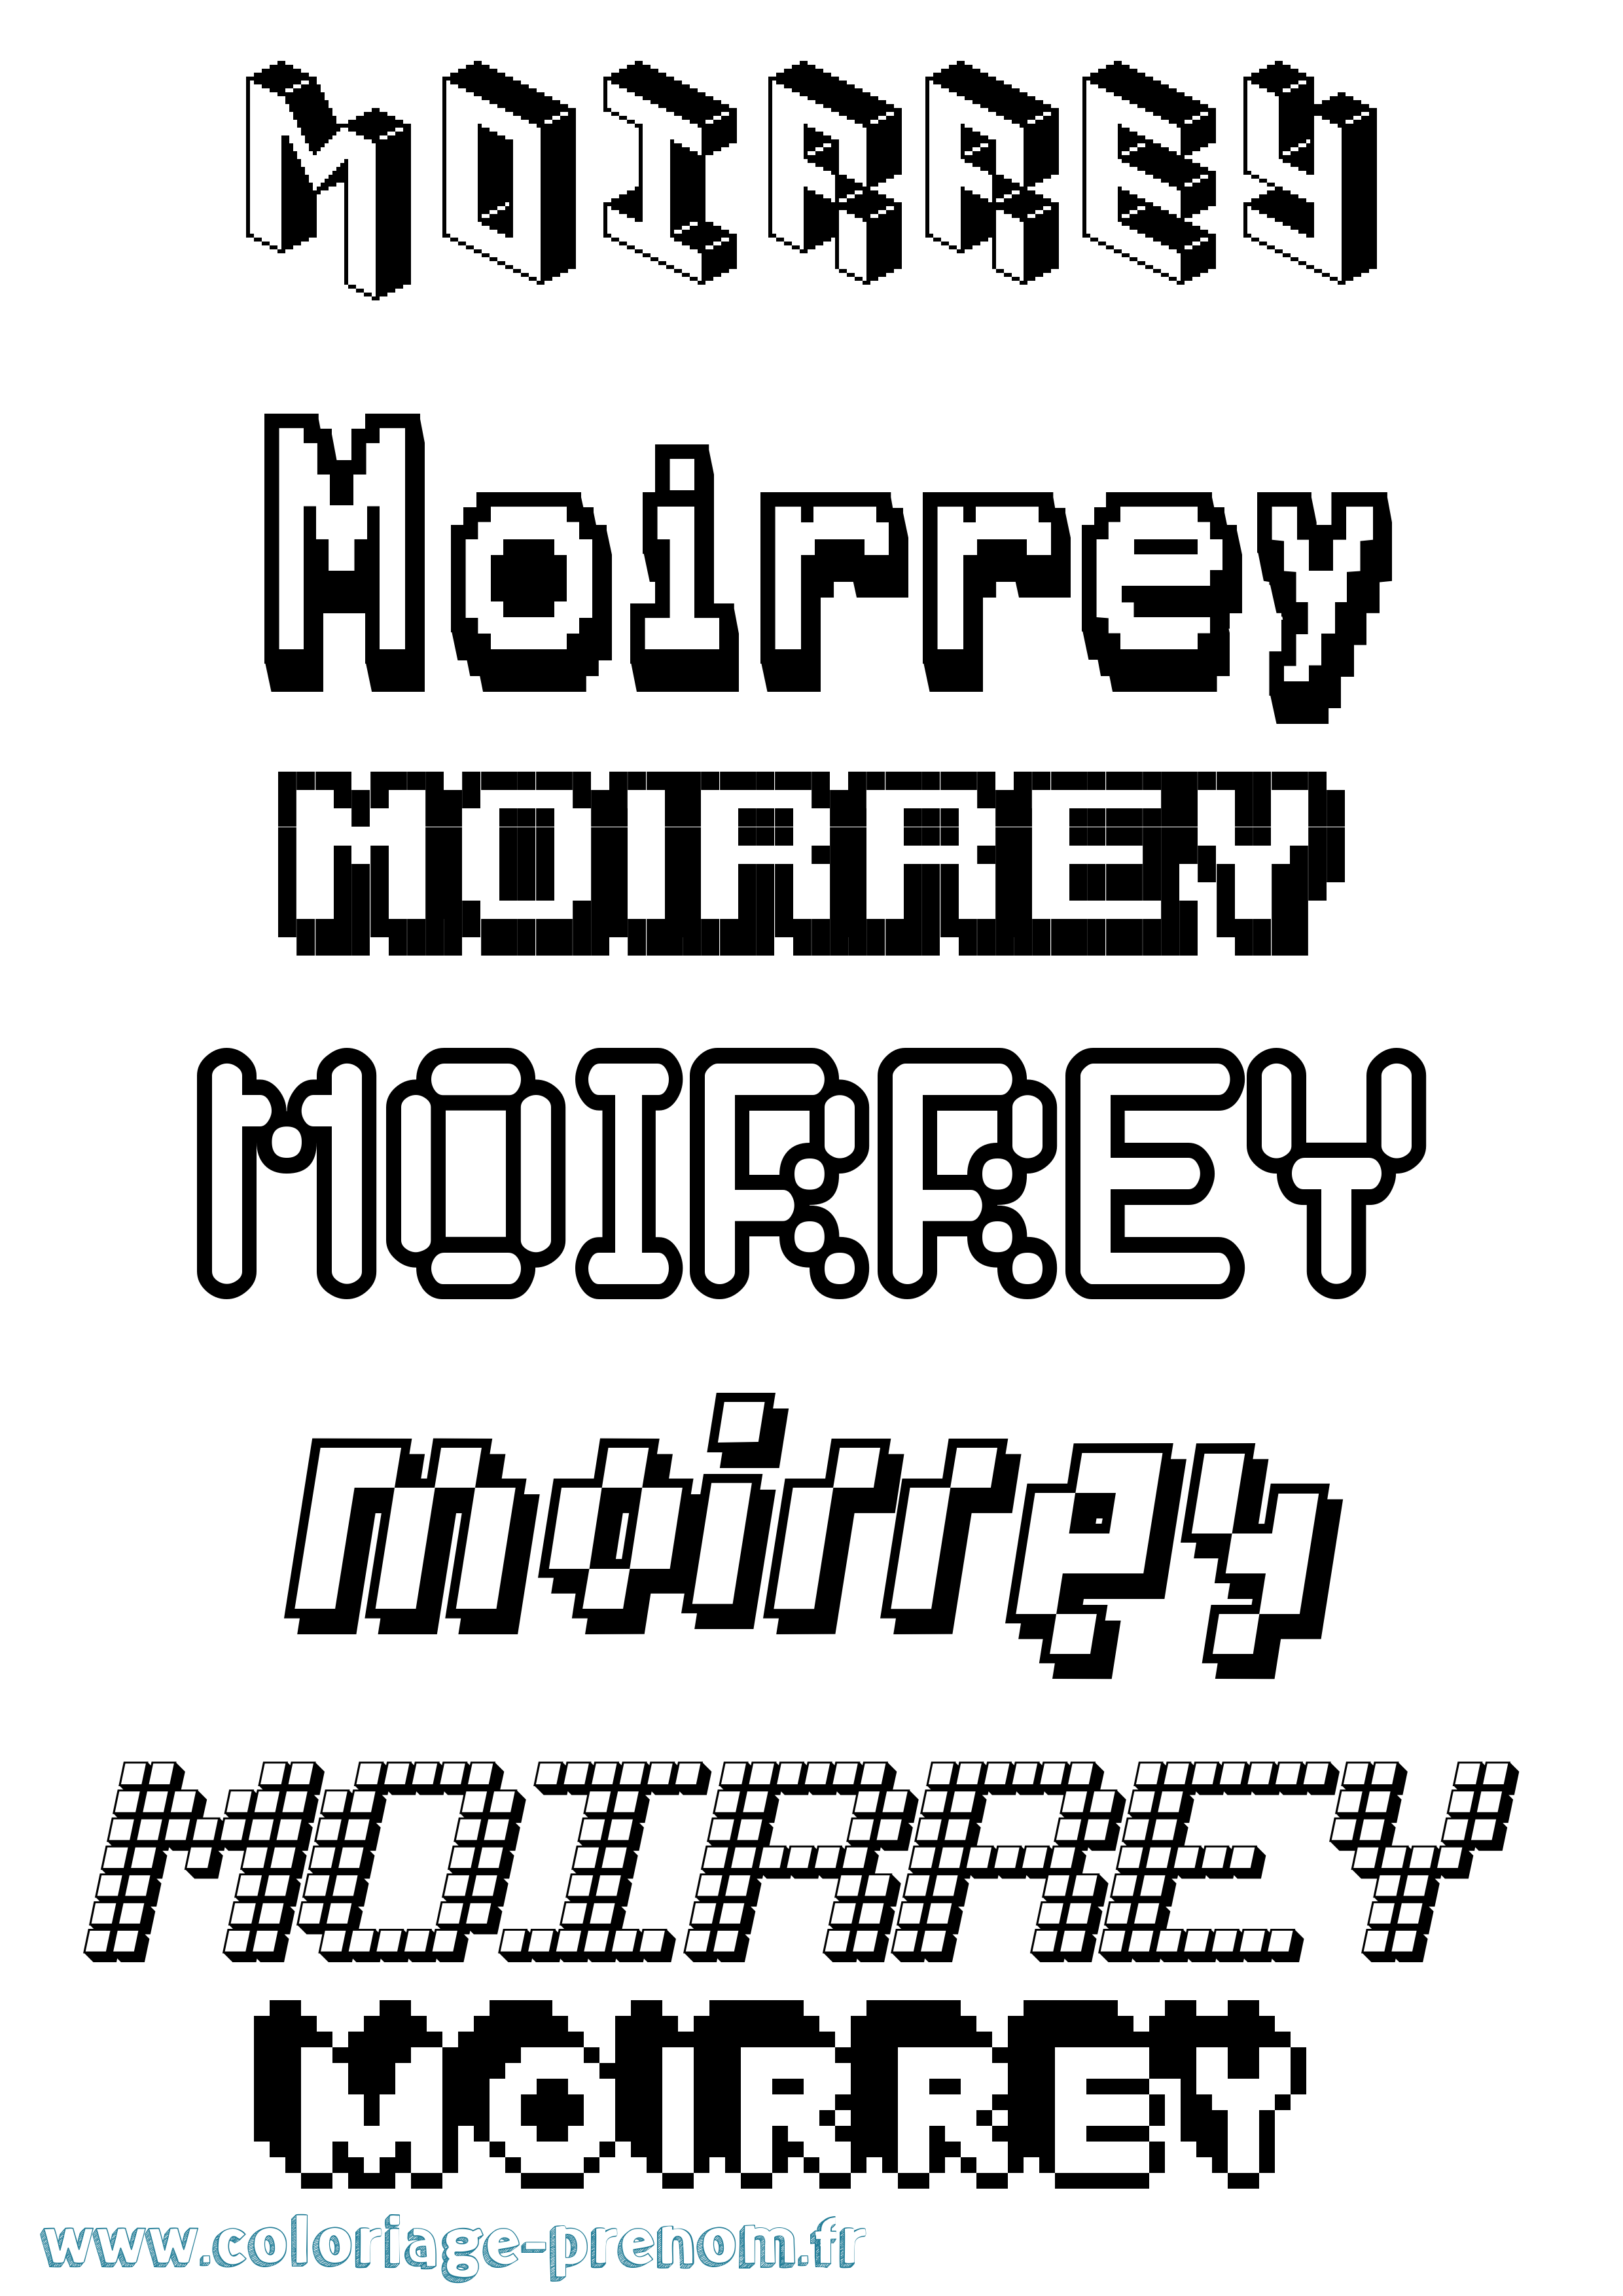 Coloriage prénom Moirrey Pixel